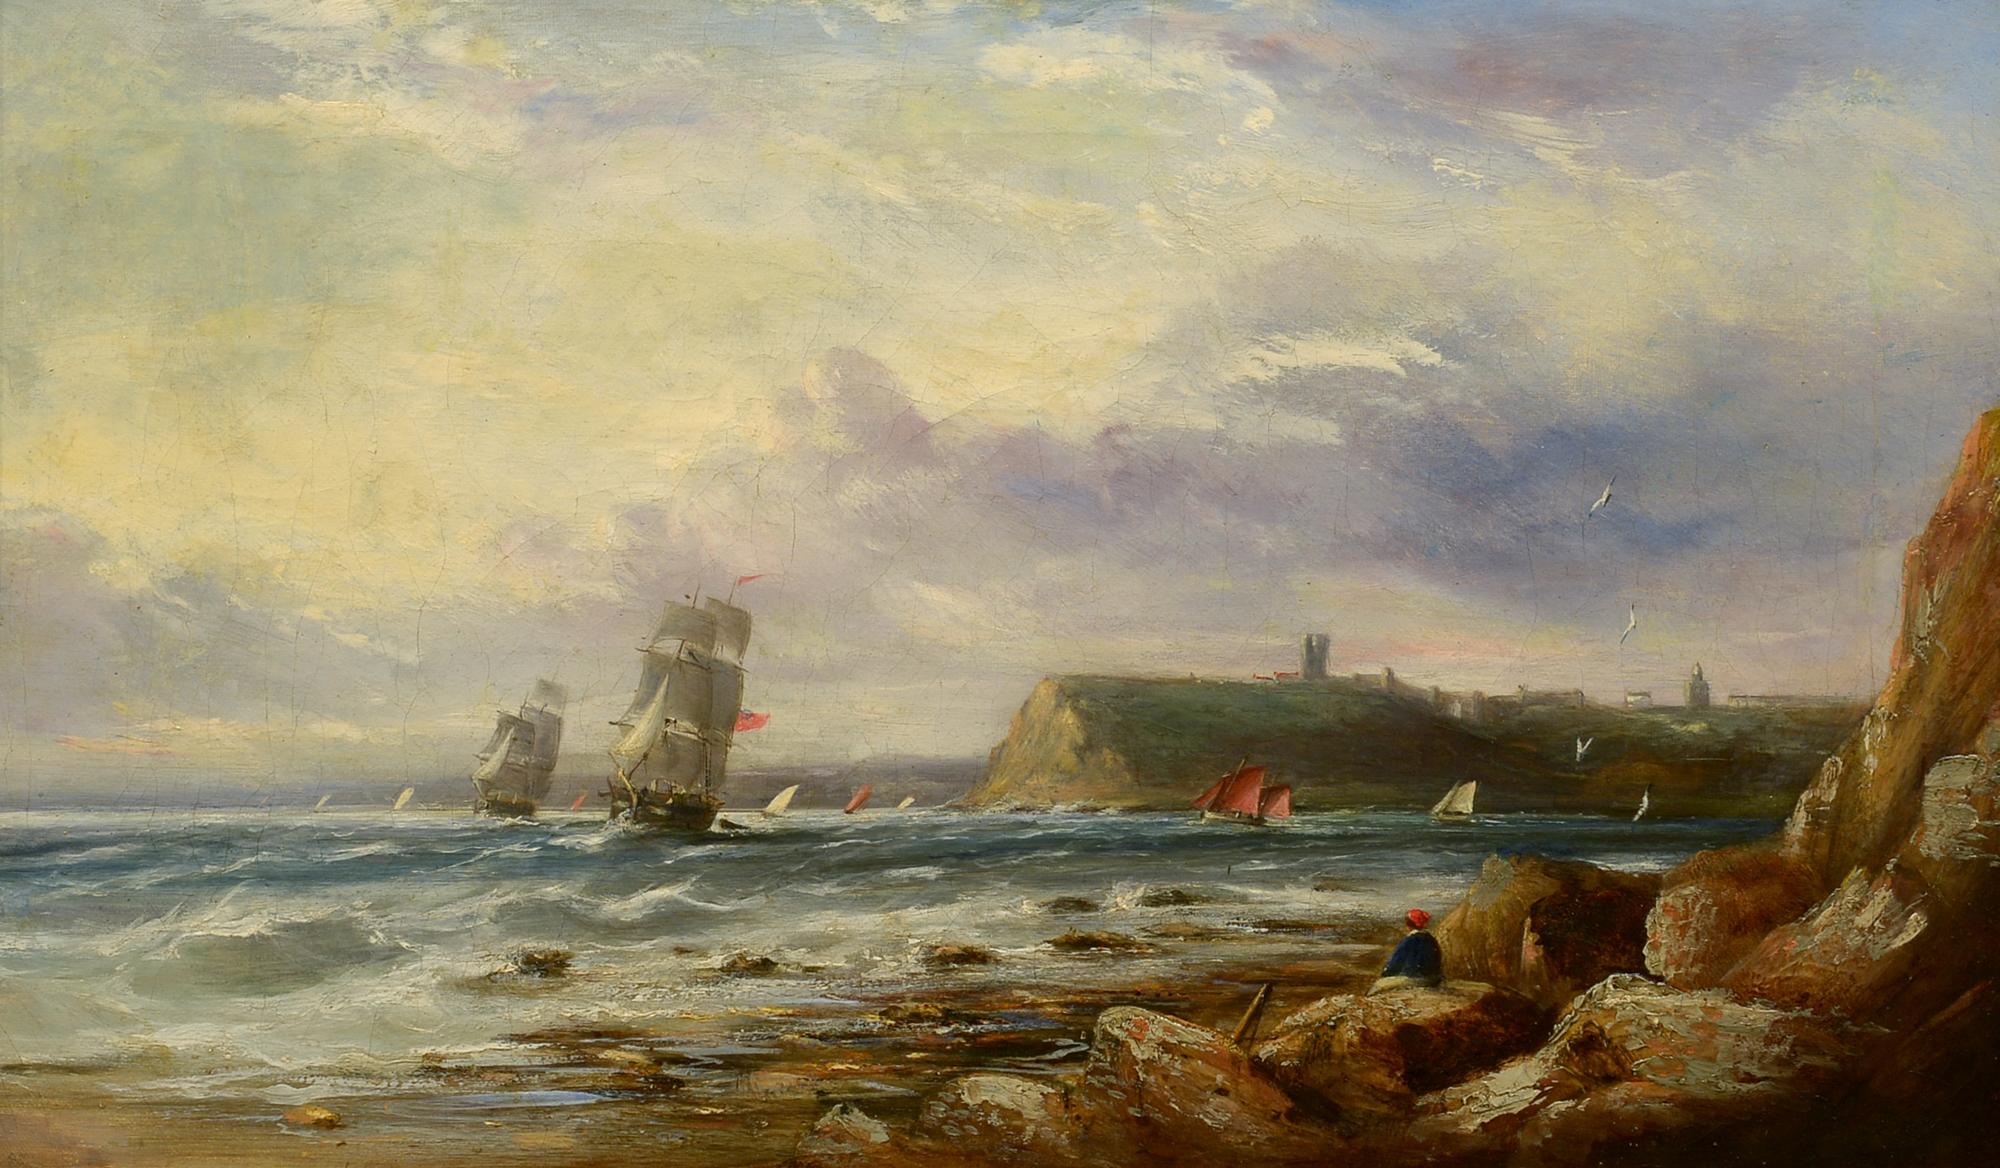 "A Lee Shore," 19th c. British School, realist, marine, coast art, ships at sea